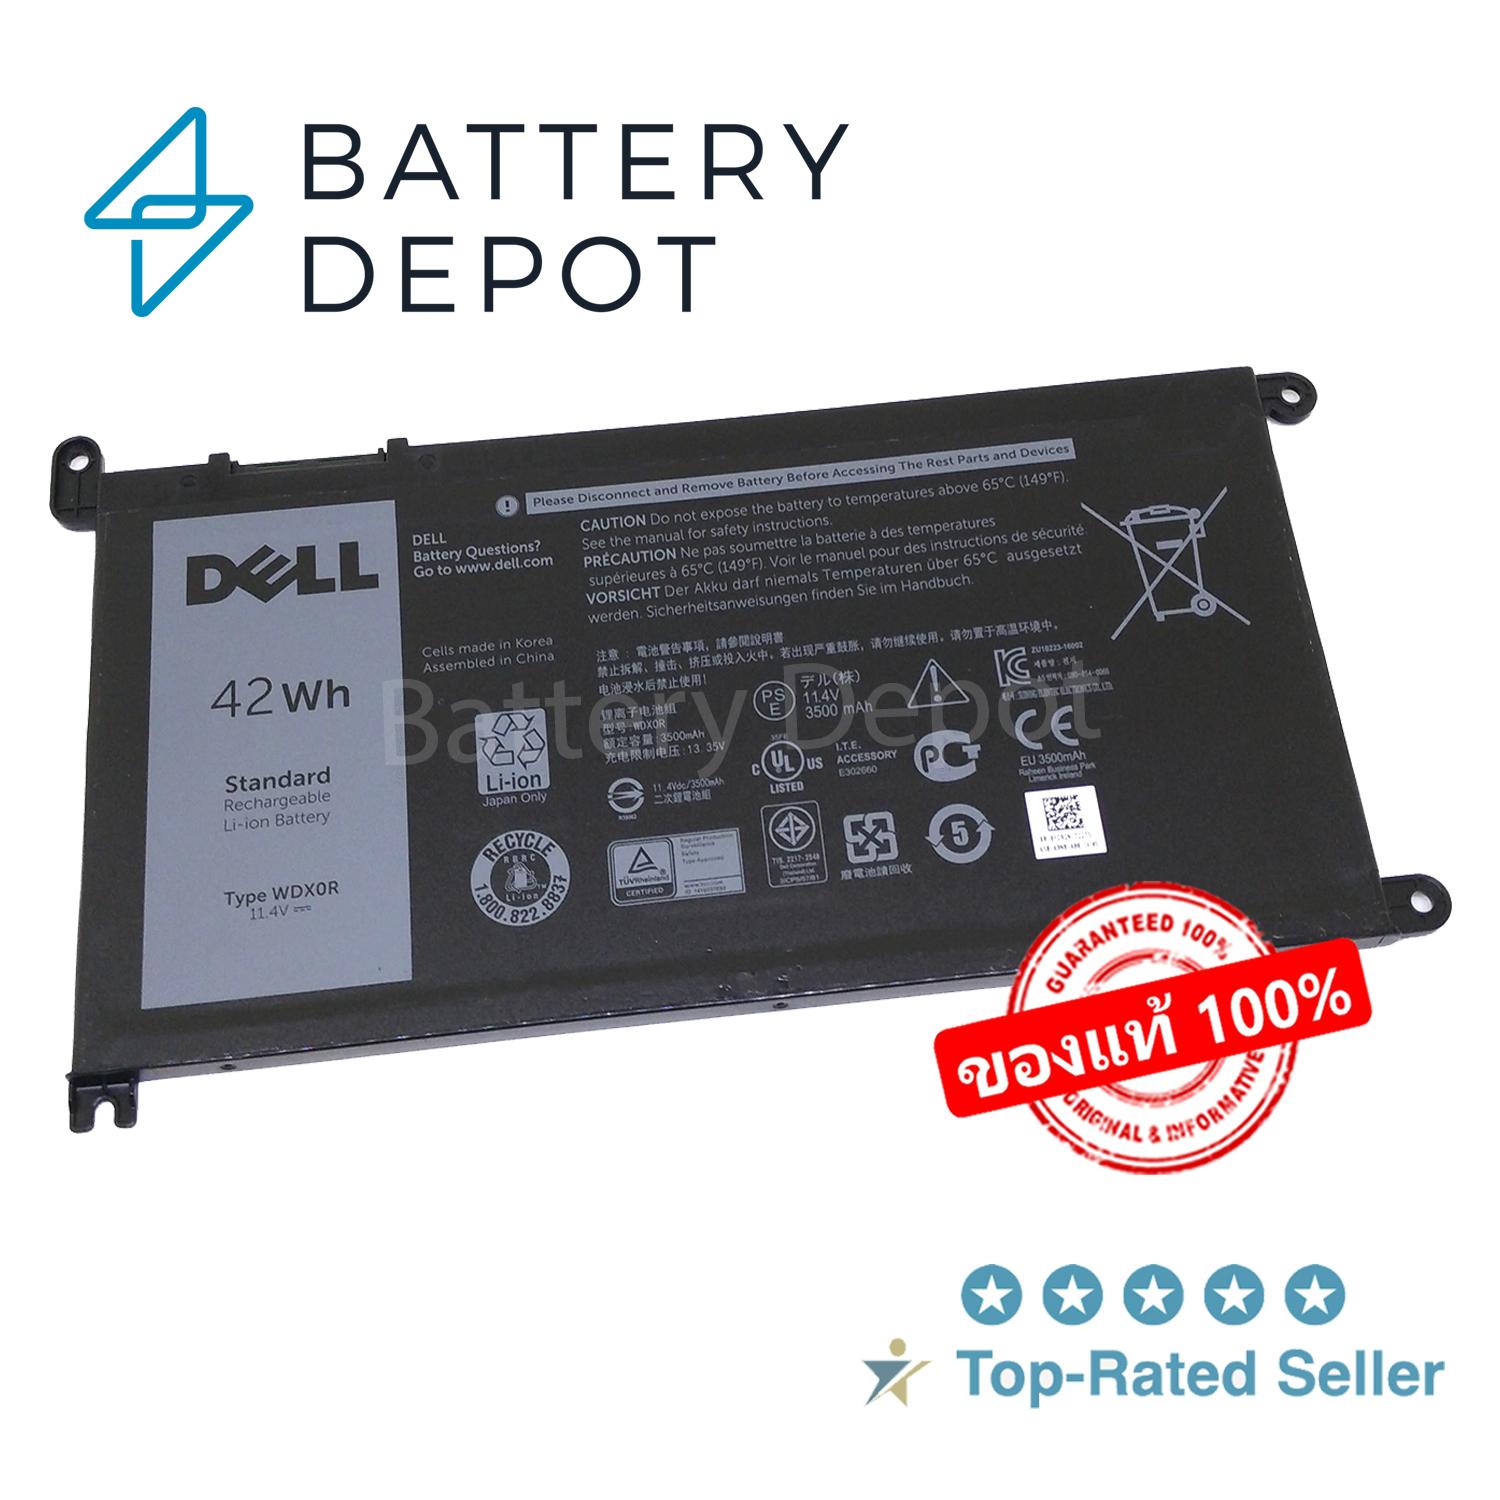 Dell แบตเตอรี่ ของแท้ WDX0R (สำหรับ Dell Inspiron 15 5567, 5568, 5767, 5378, 13 7368, 7460, 14-7472) WDX0R Dell battery Notebook เดล แบตเตอรี่โน๊ตบุ๊ค